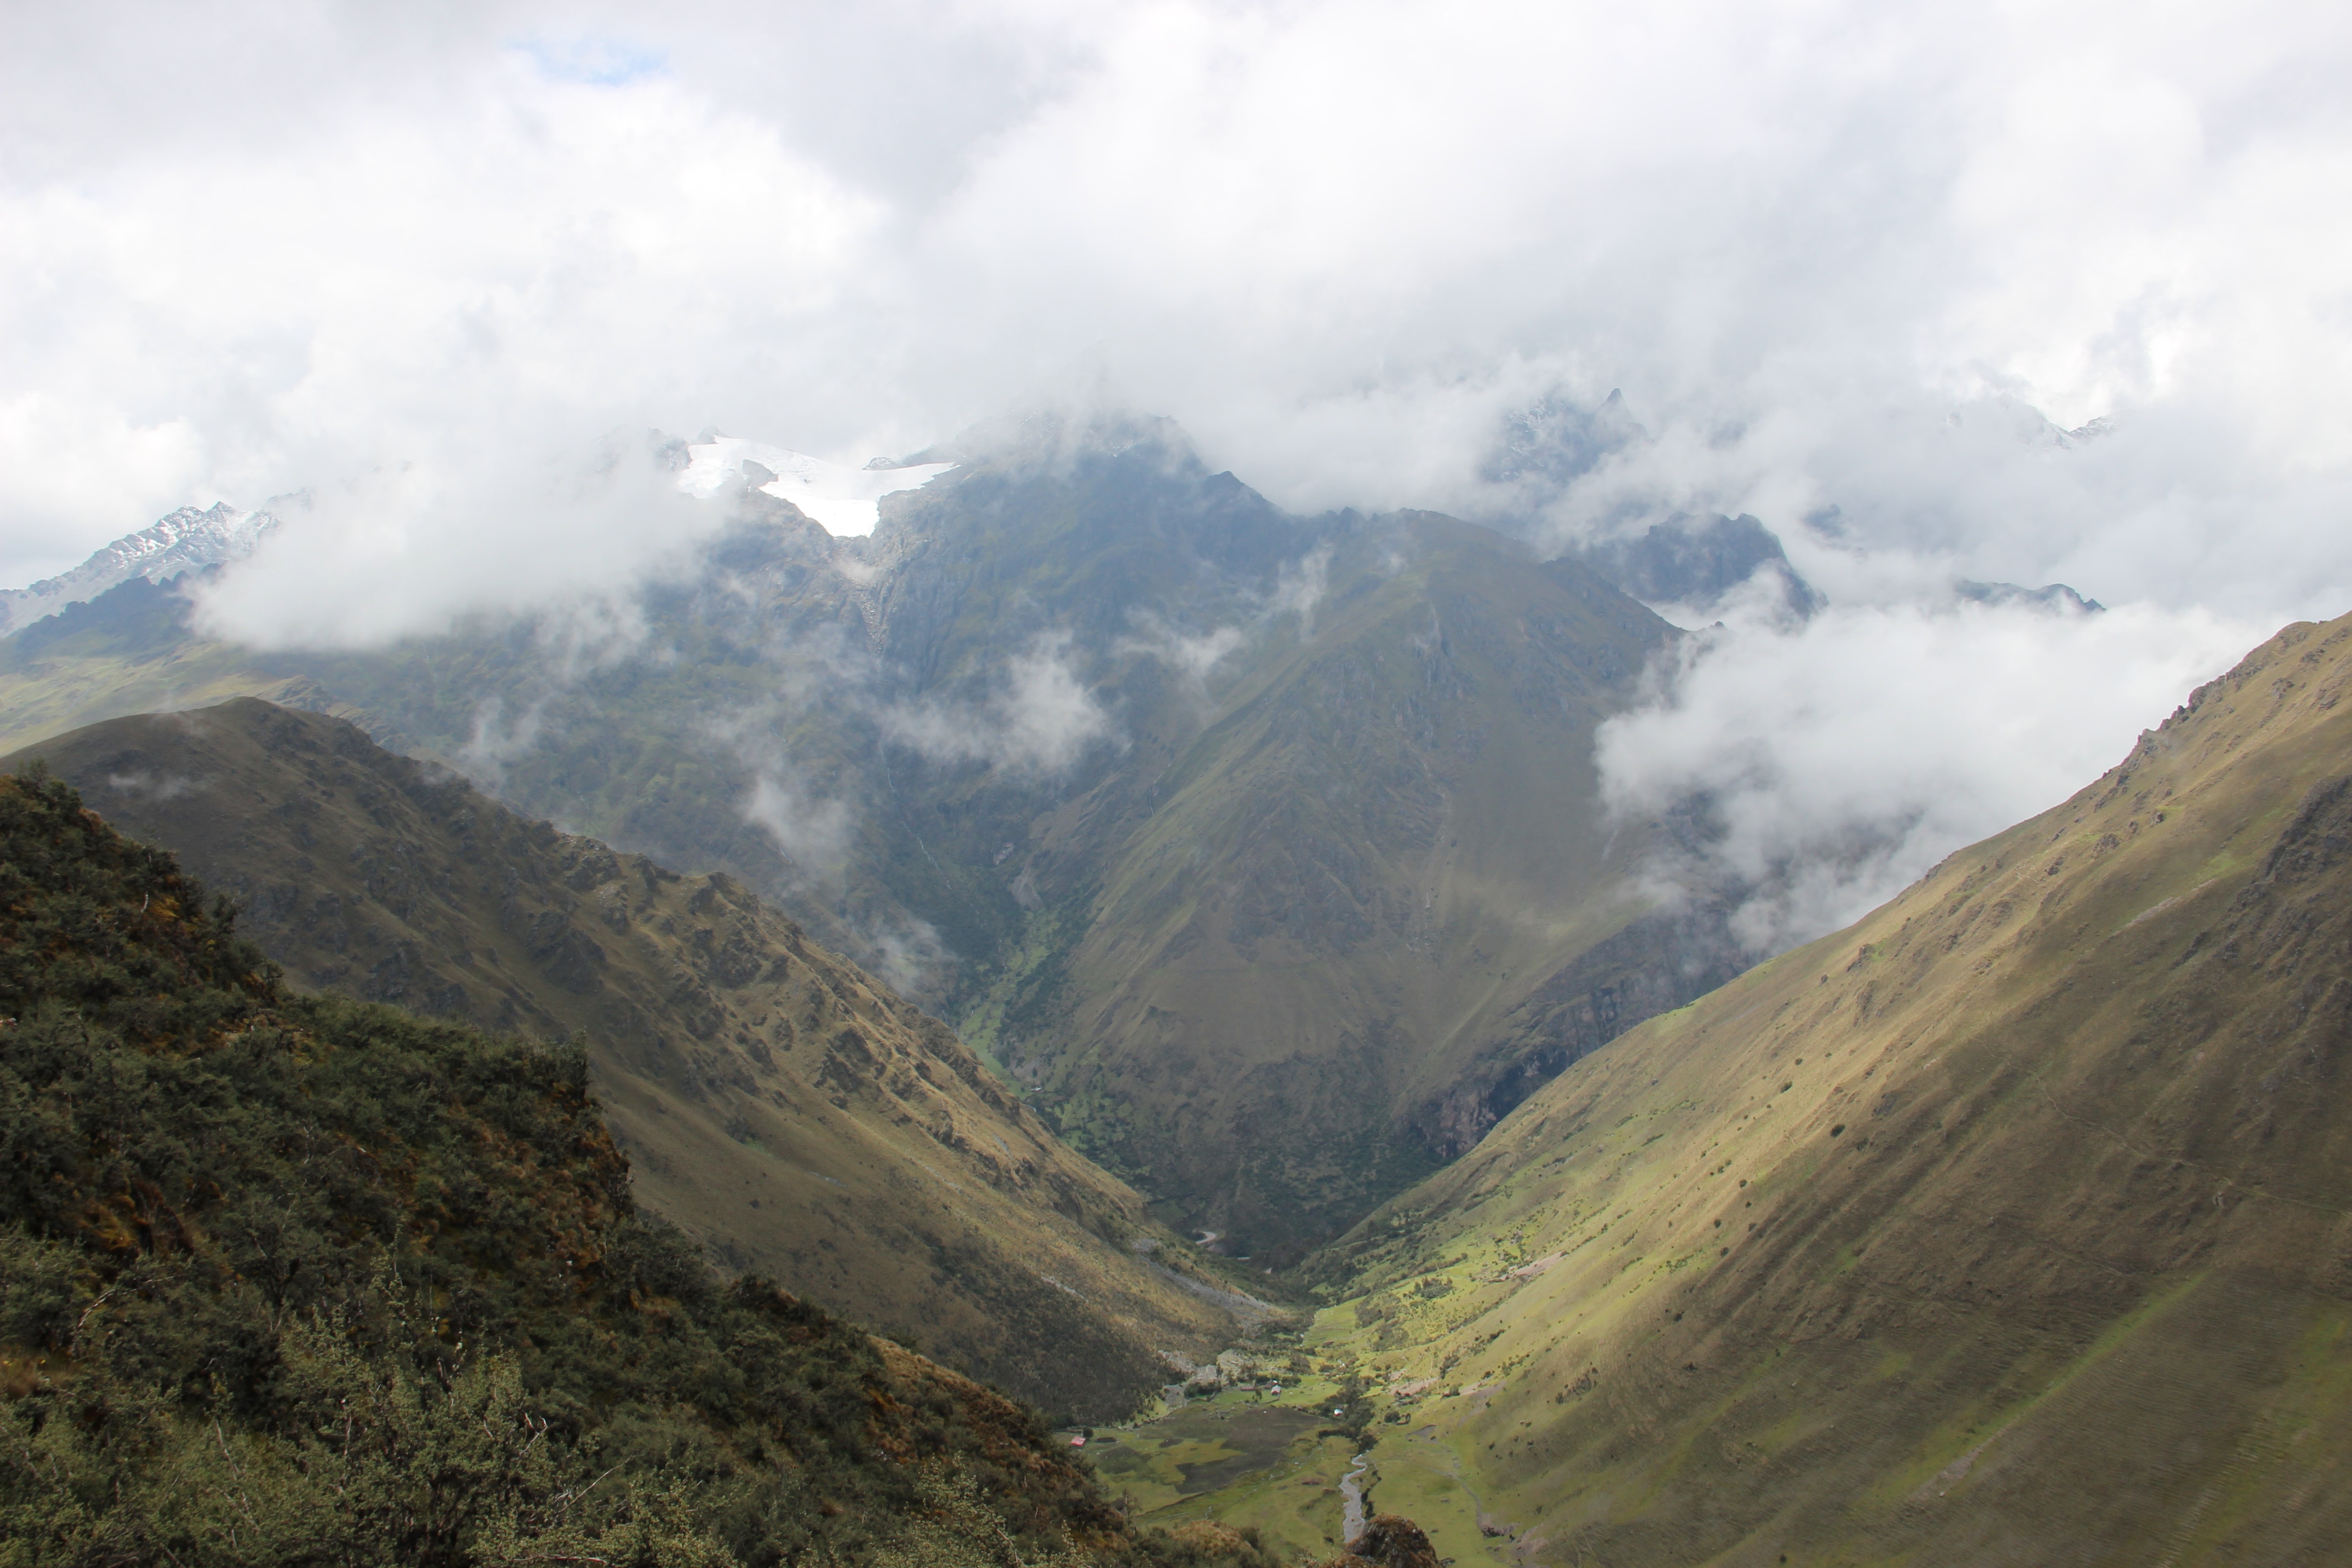 Image credit: Hajar Benelcadi, Project :HERMOSA, Peruvian Andes- Polylepis restoration site of ECOAN (https://www.ecoanperu.org/)